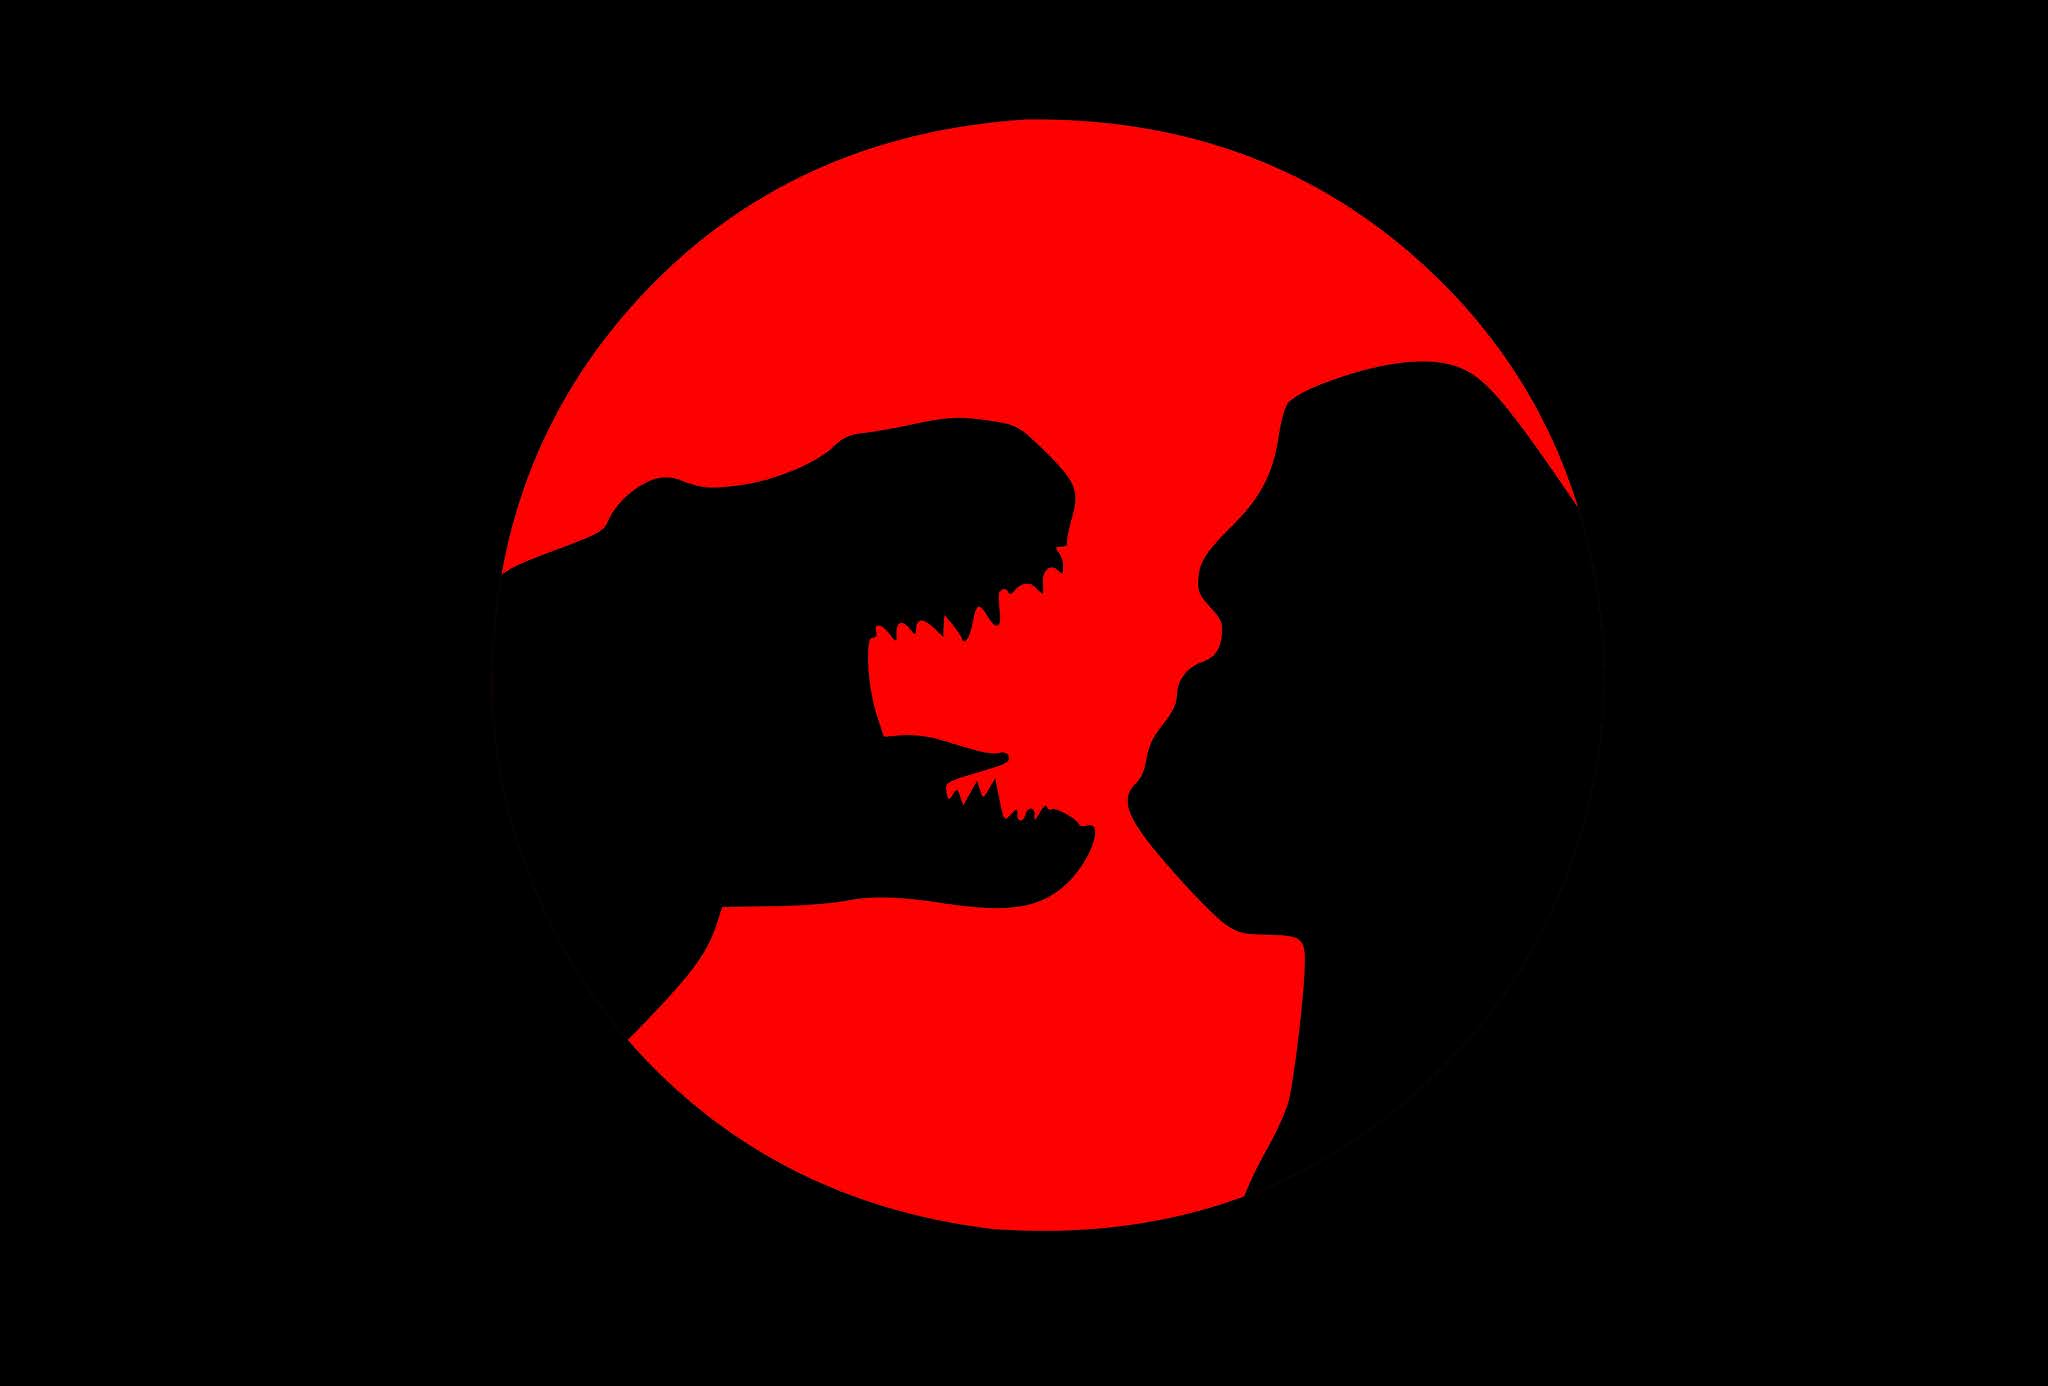 Godzilla vs king Kong graphic design